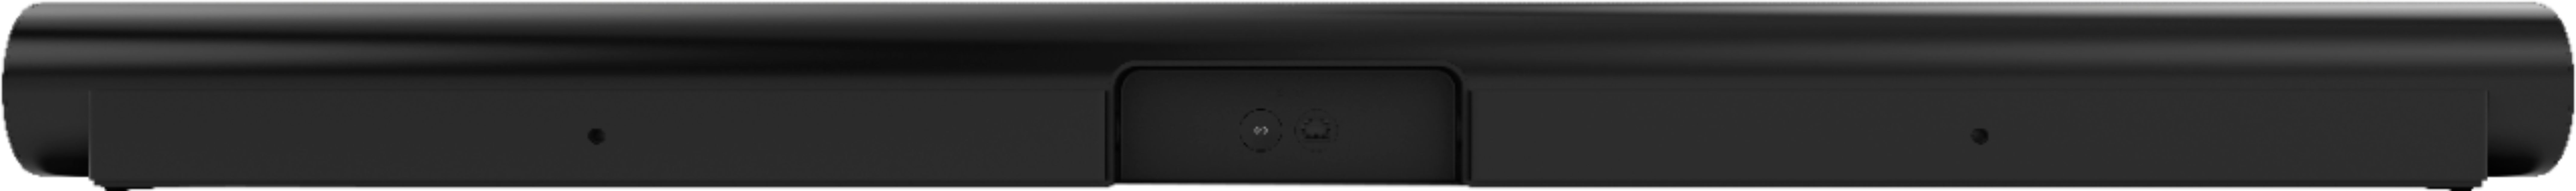 Back View: Polk Audio - Signa S2 2.1 Ch Ultra-Slim Soundbar with Wireless Subwoofer and Dolby Digital - Black